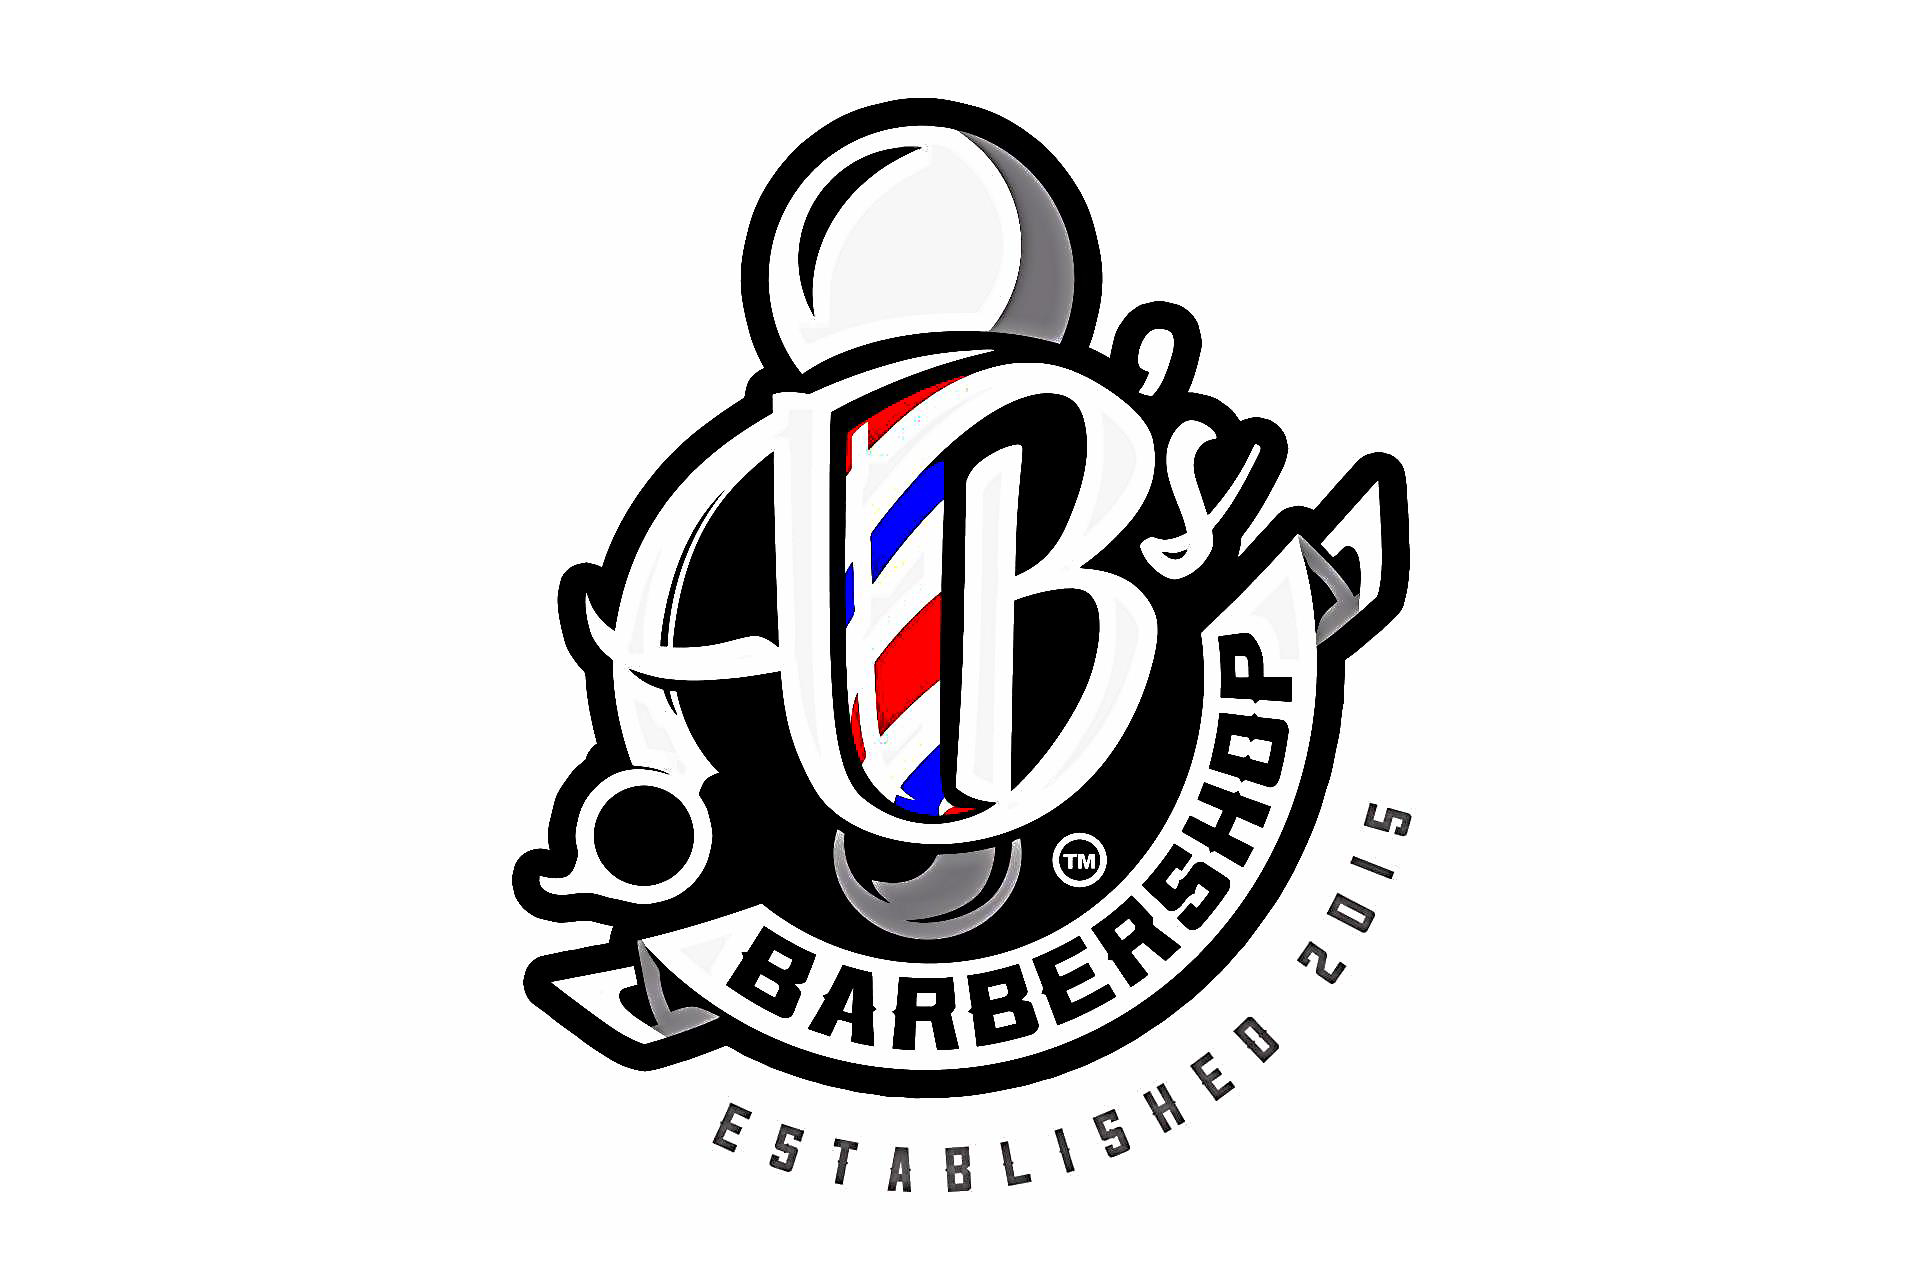 Best Men's Barbershop Near Me by wellkeptbarbershop1 on DeviantArt